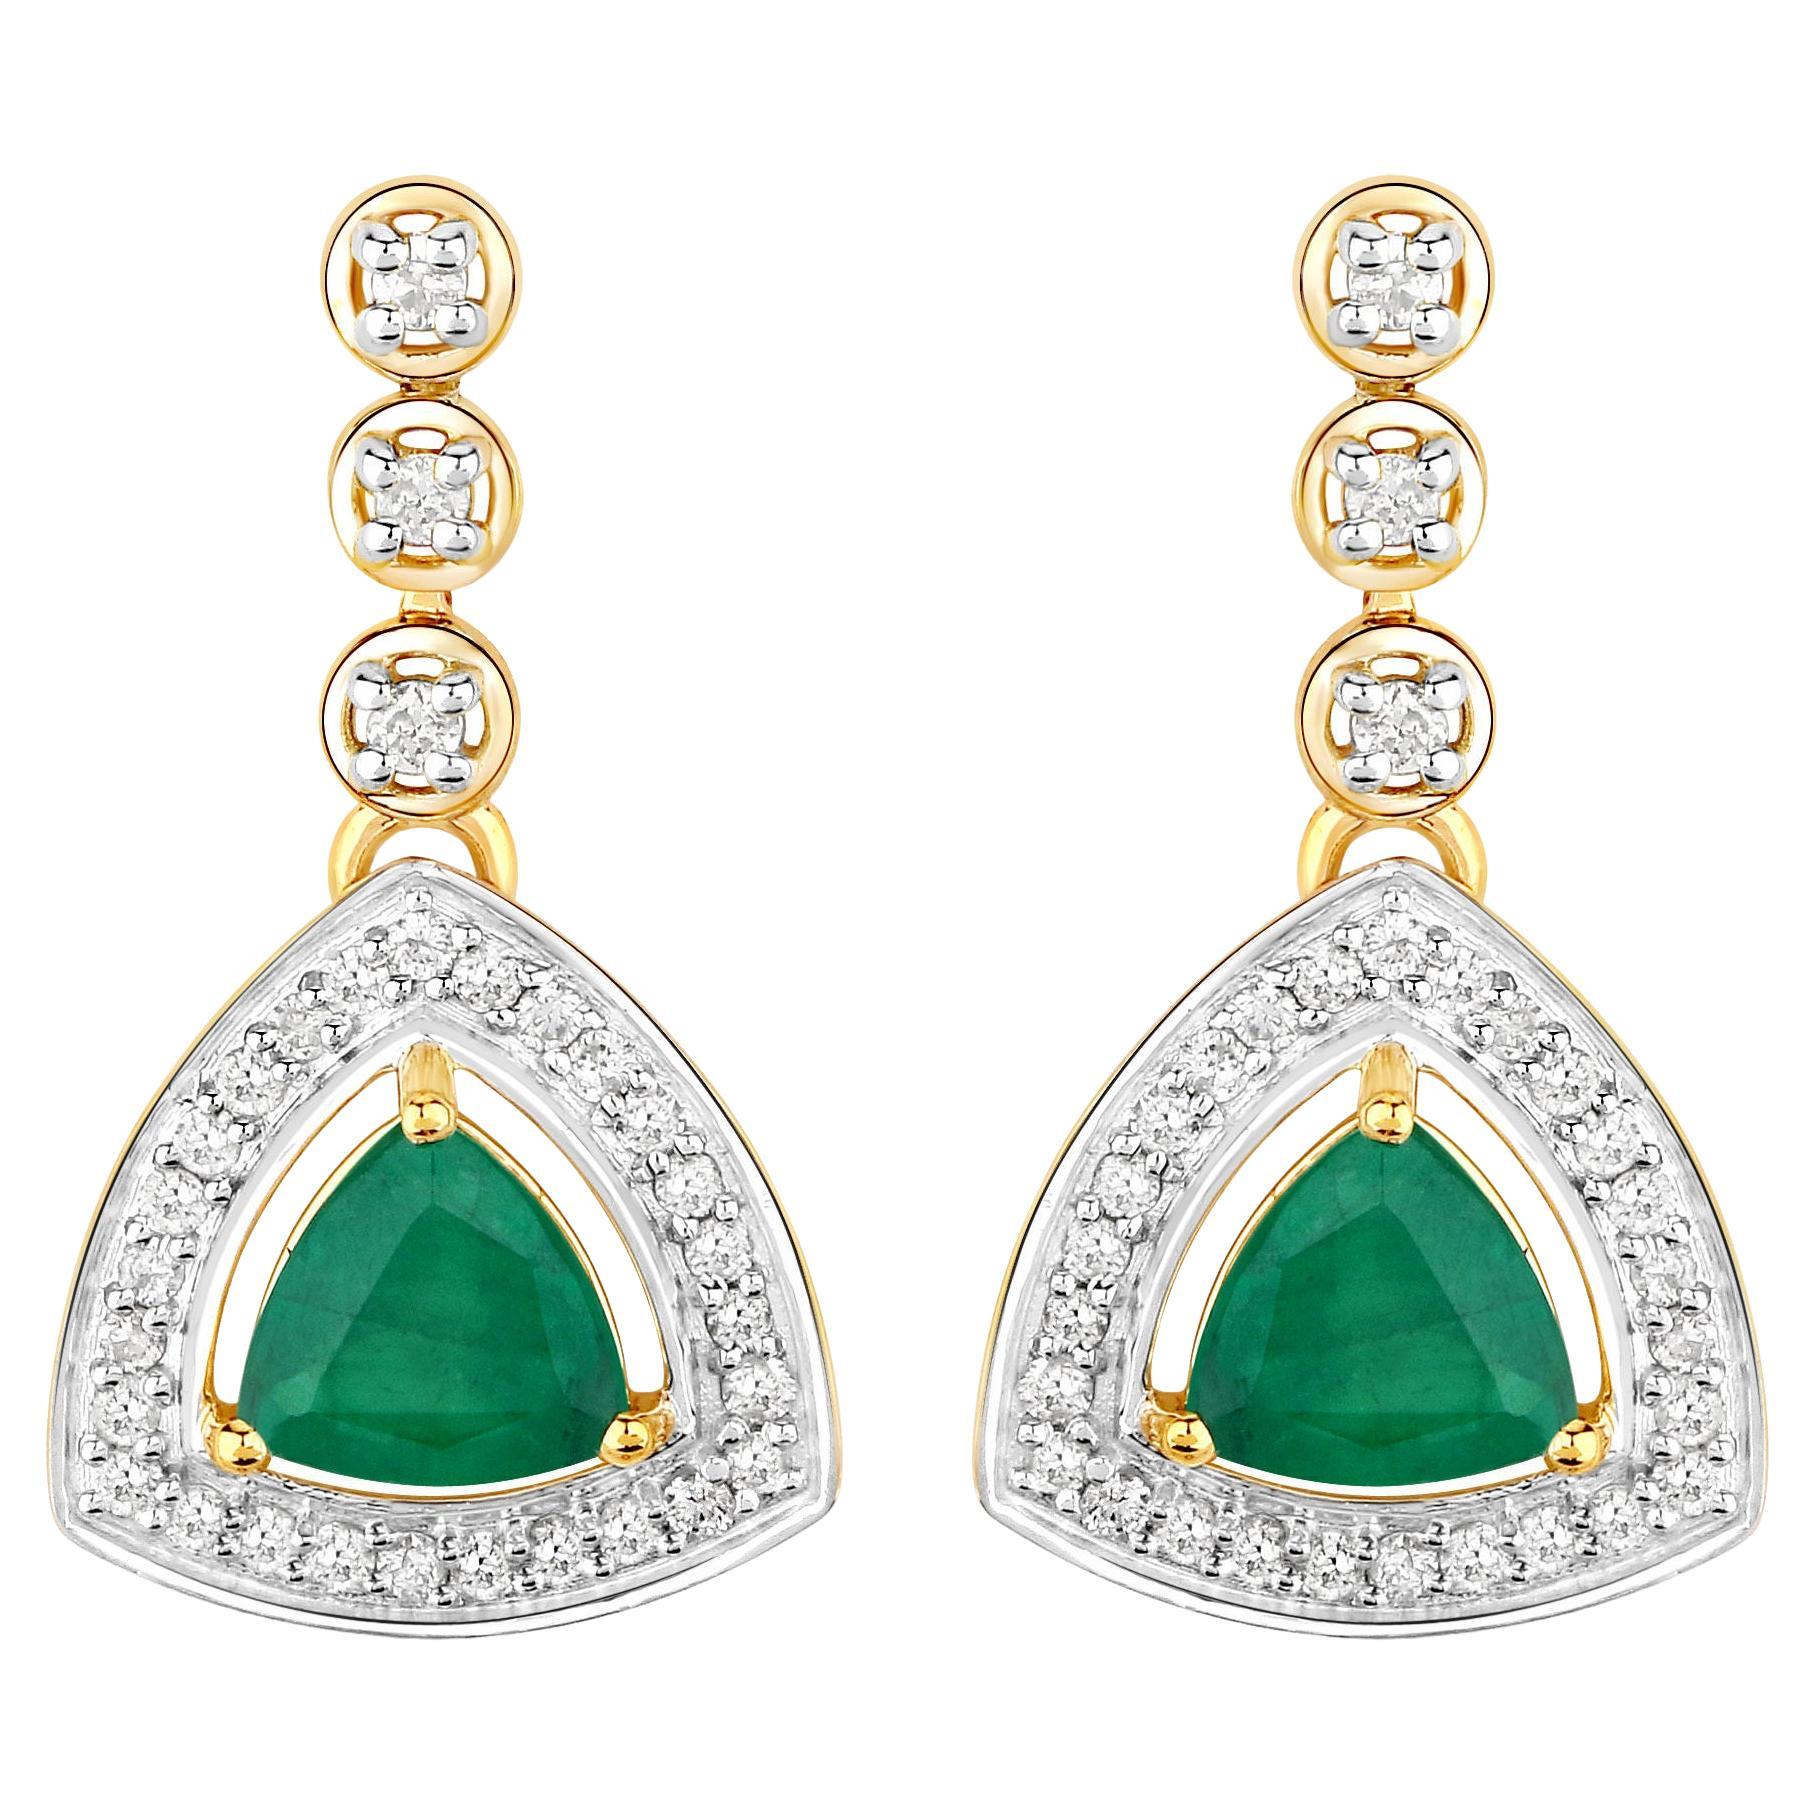 Natural Zambian Emerald and Diamond Halo Dangle Earrings 14K Yellow Gold